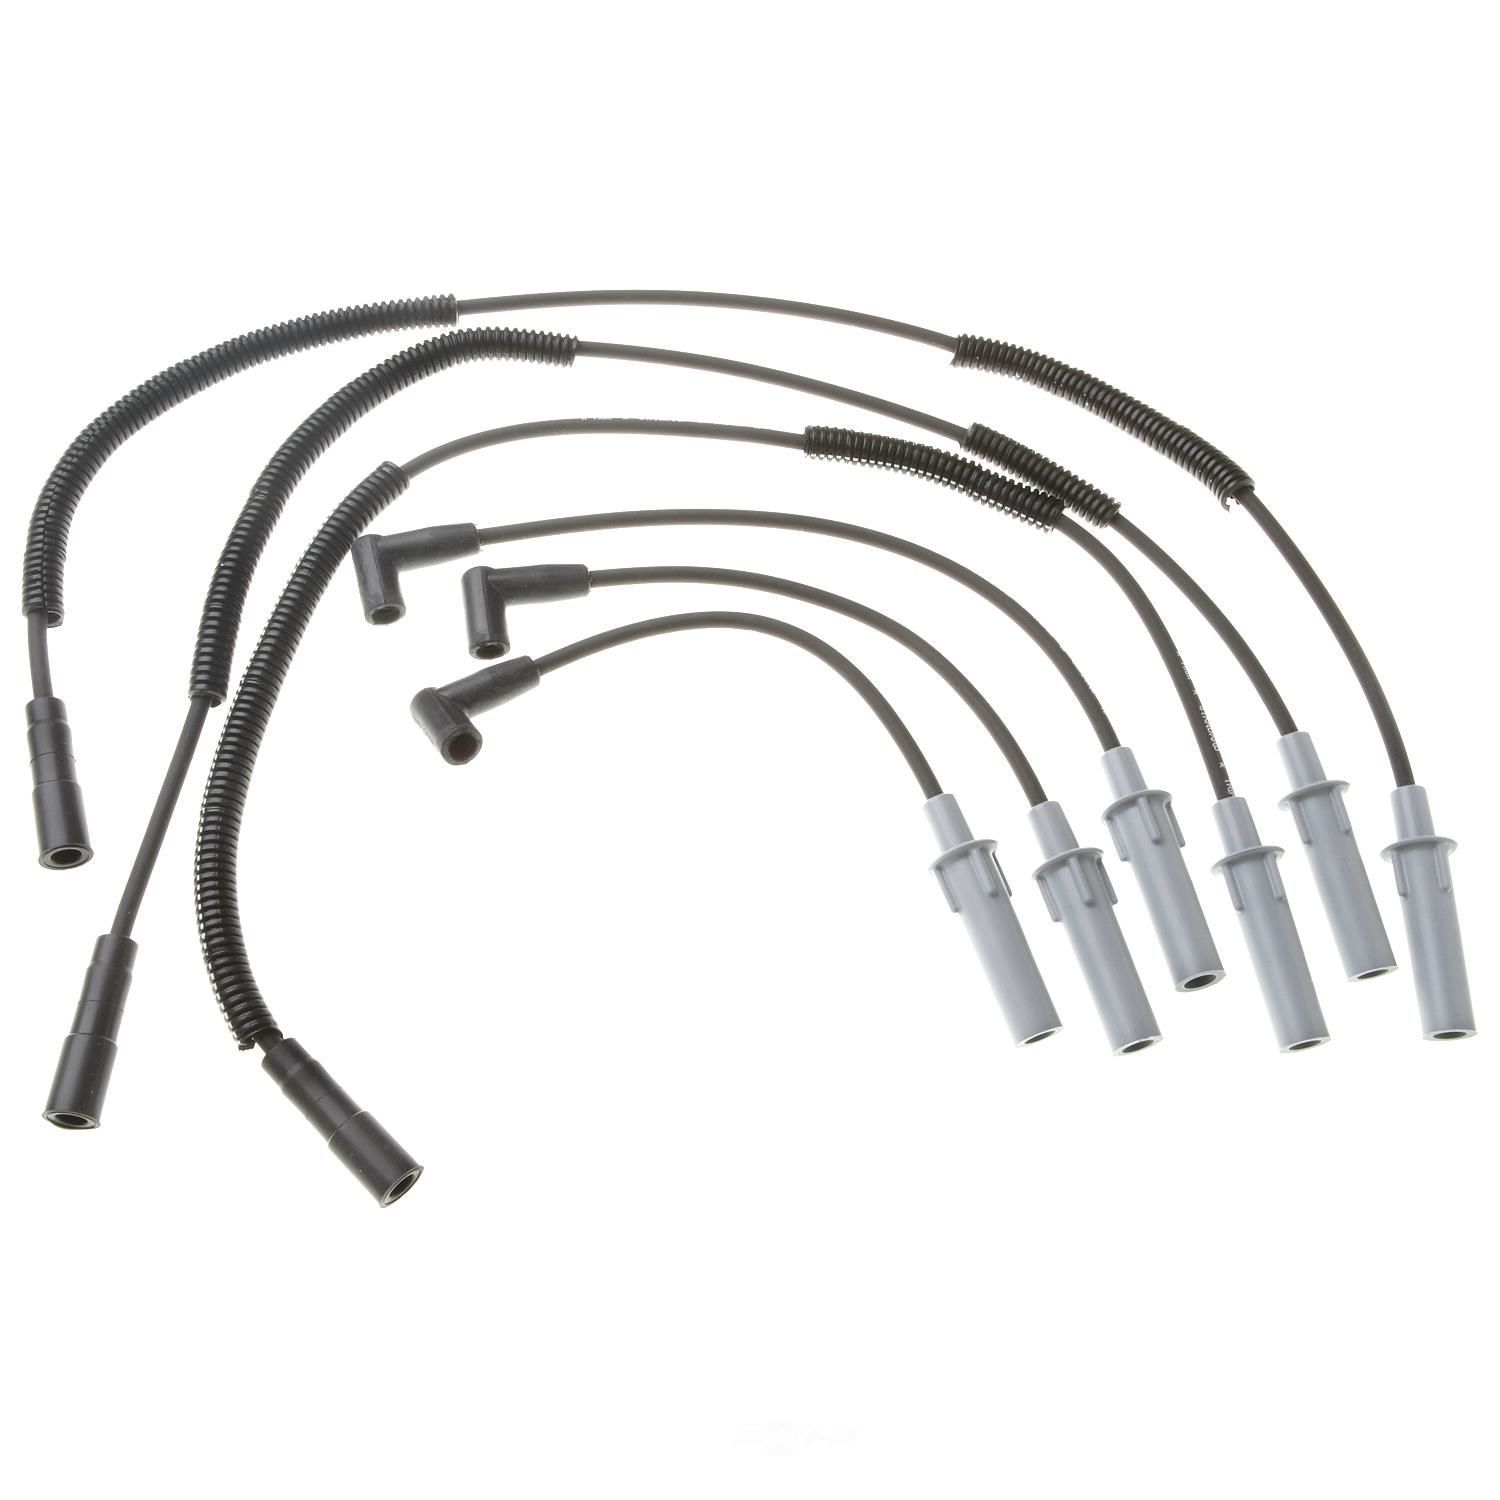 2011 Jeep Wrangler Spark Plug Wire Set - Standard Motor Products 7733